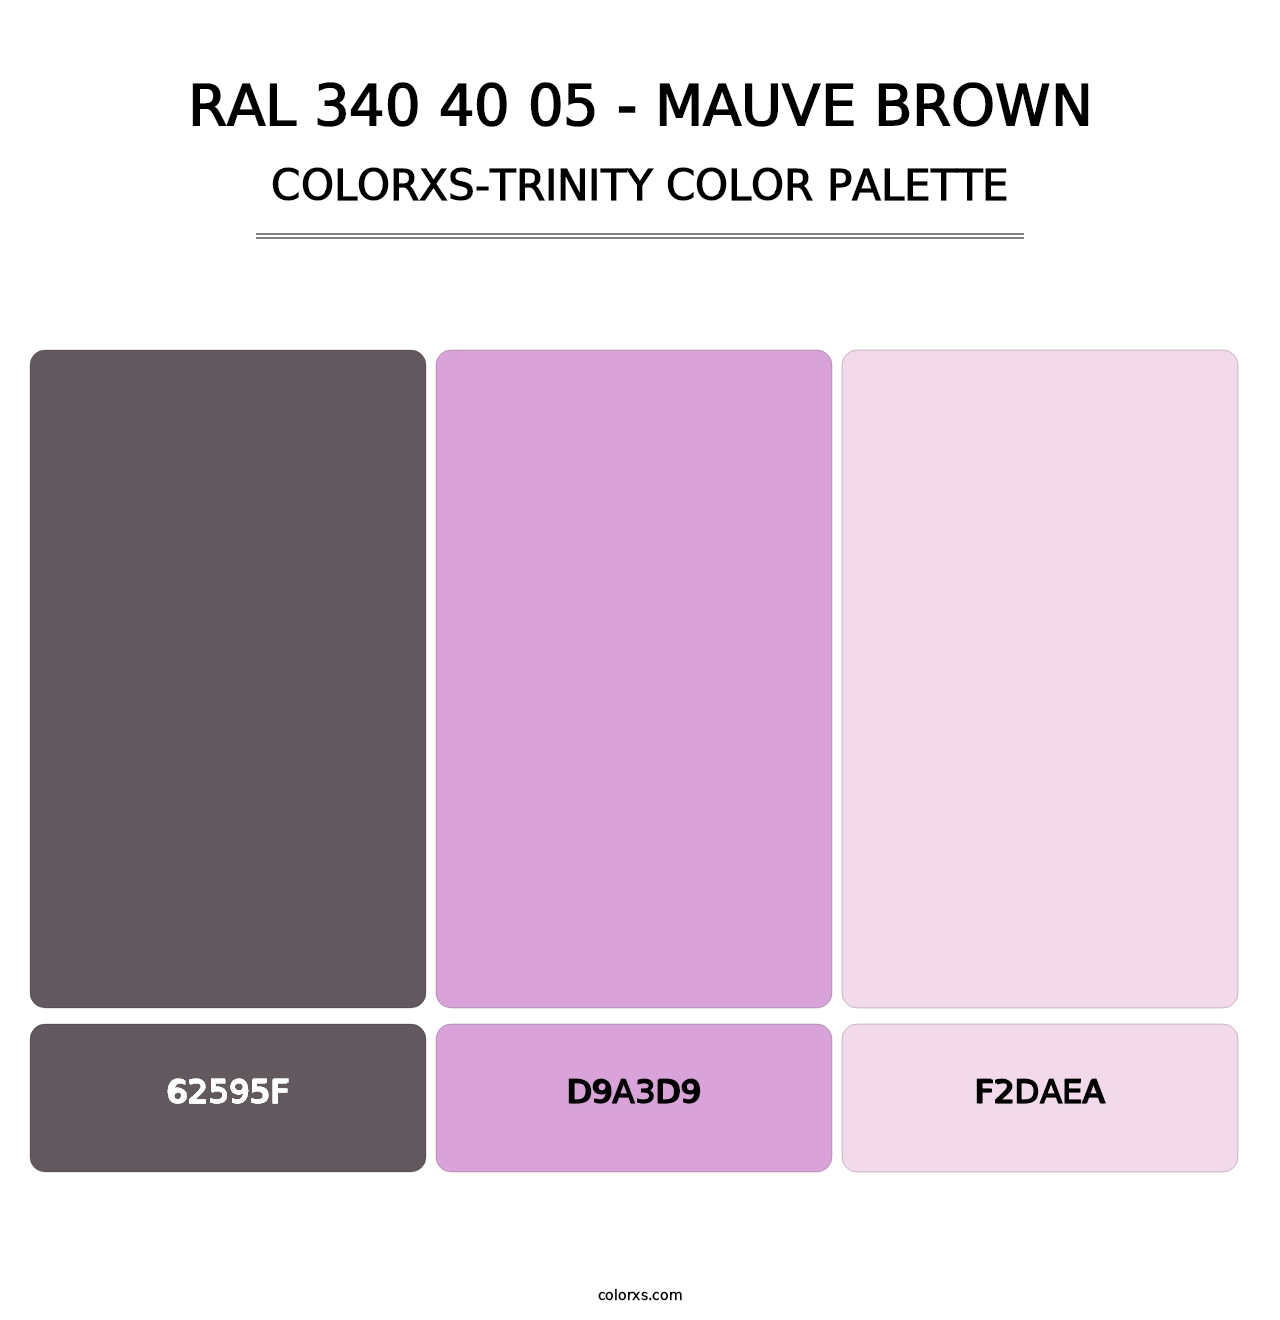 RAL 340 40 05 - Mauve Brown - Colorxs Trinity Palette